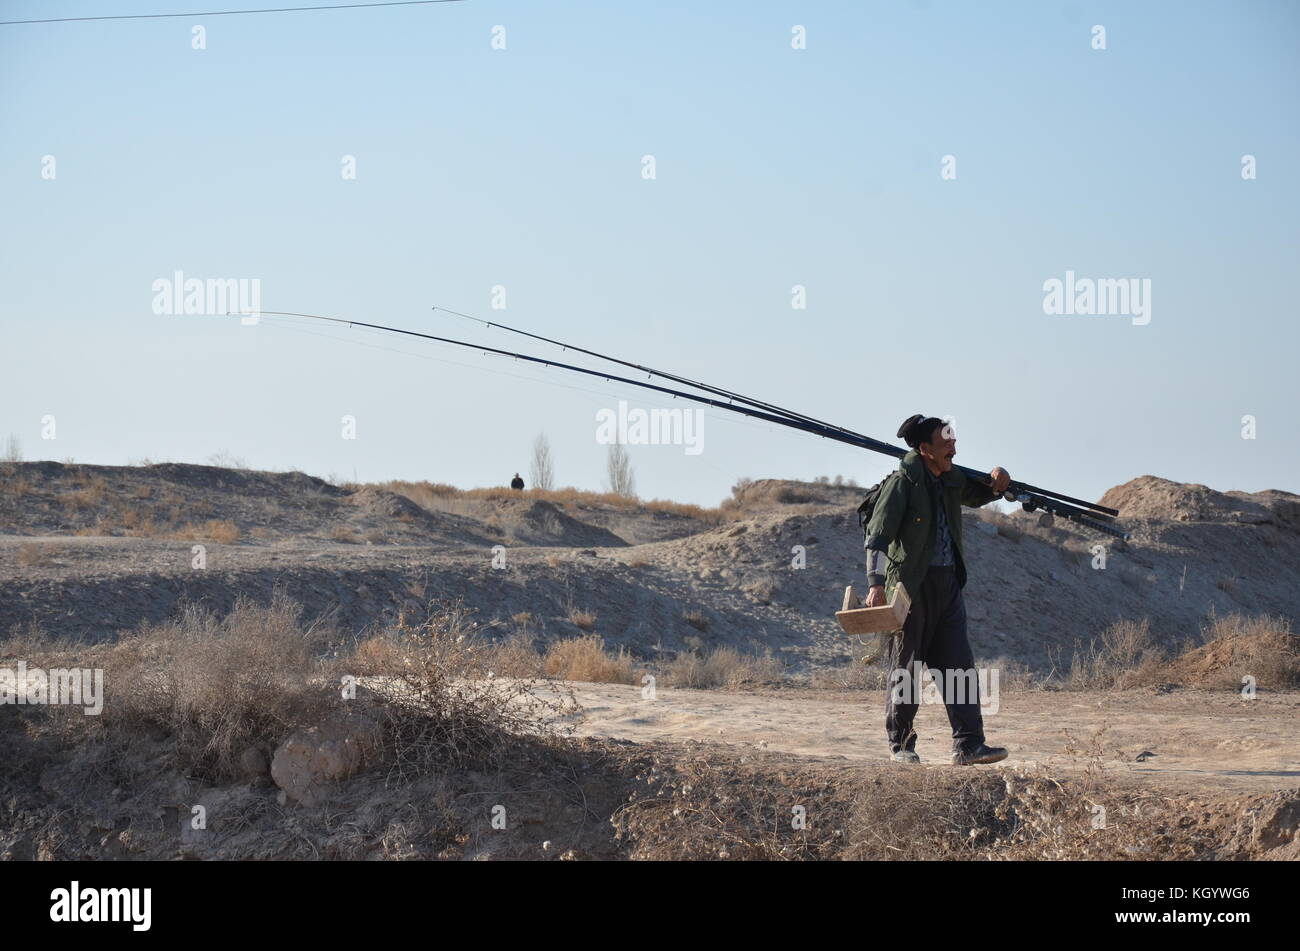 Uzbeki man with fishing rod and small stool walking in the desert in Uzbekistan. Stock Photo